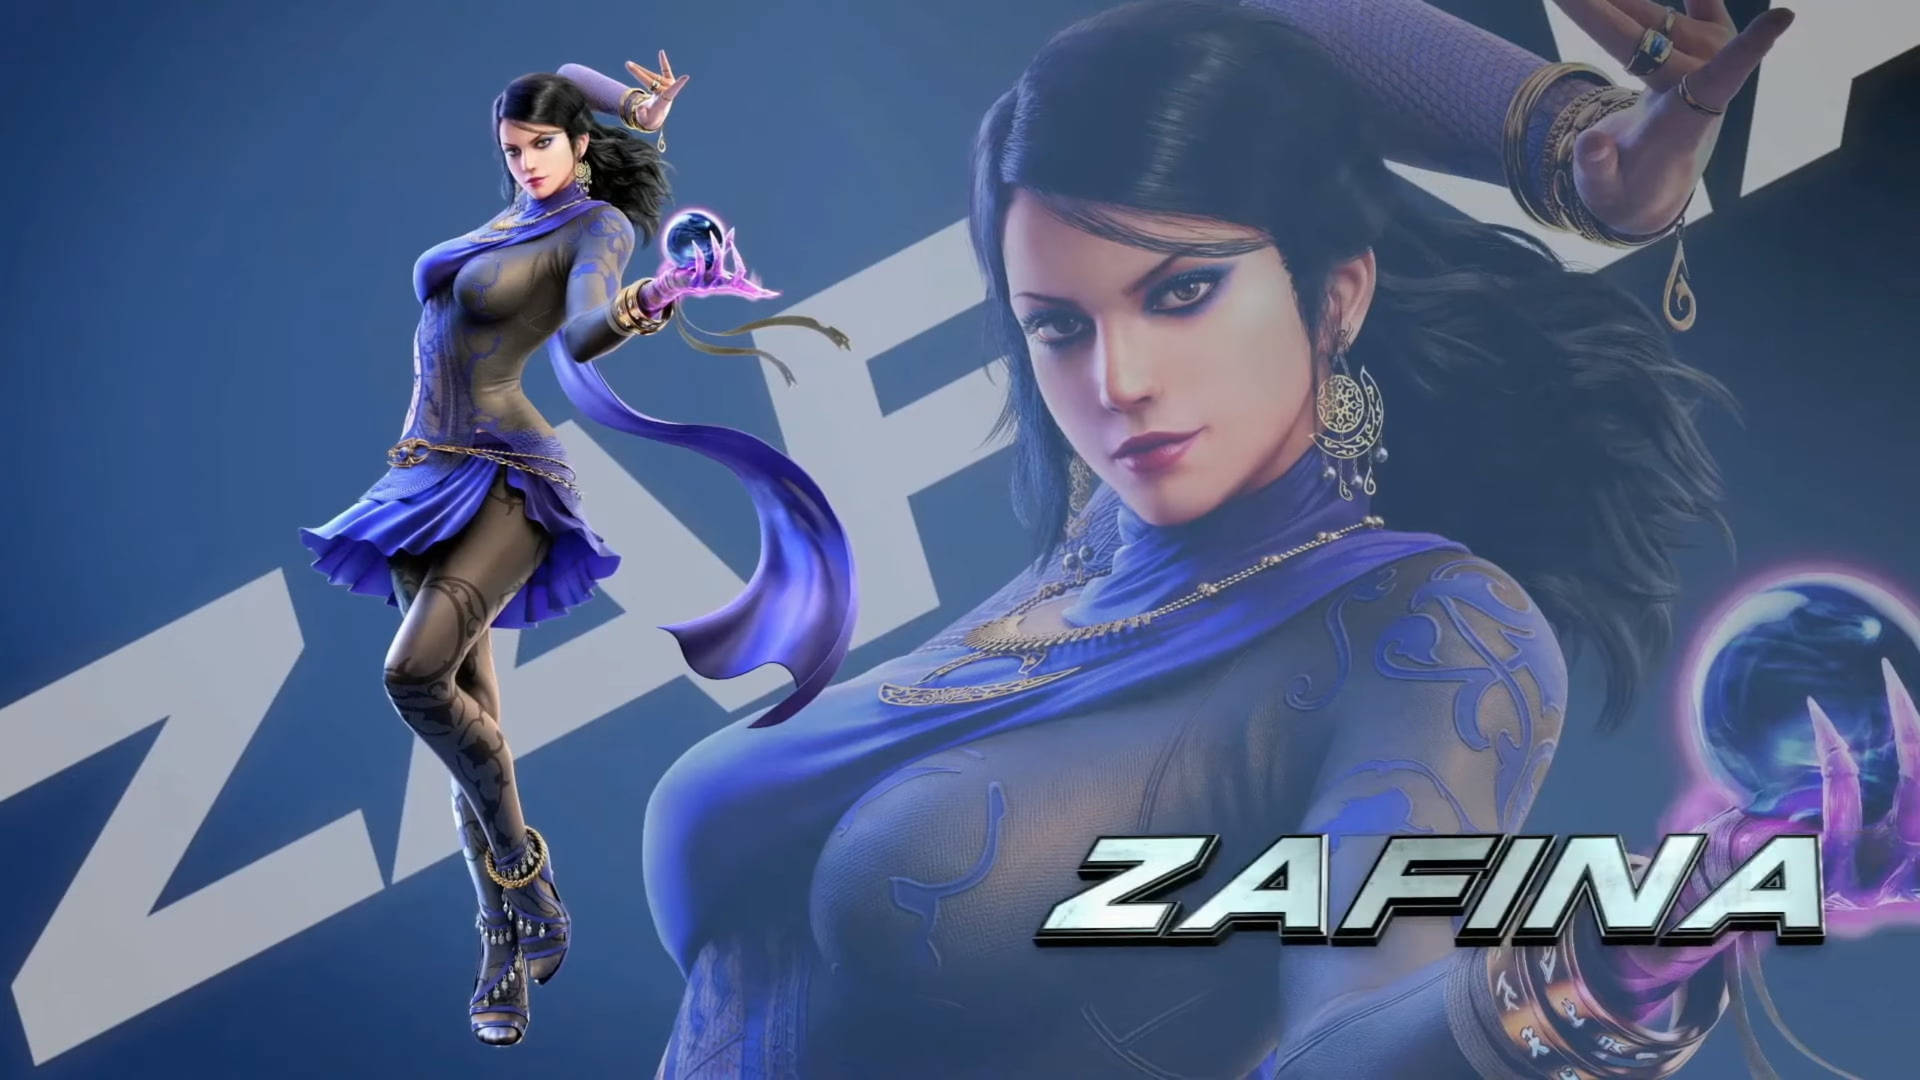 Tekken Zafina Digital Cover